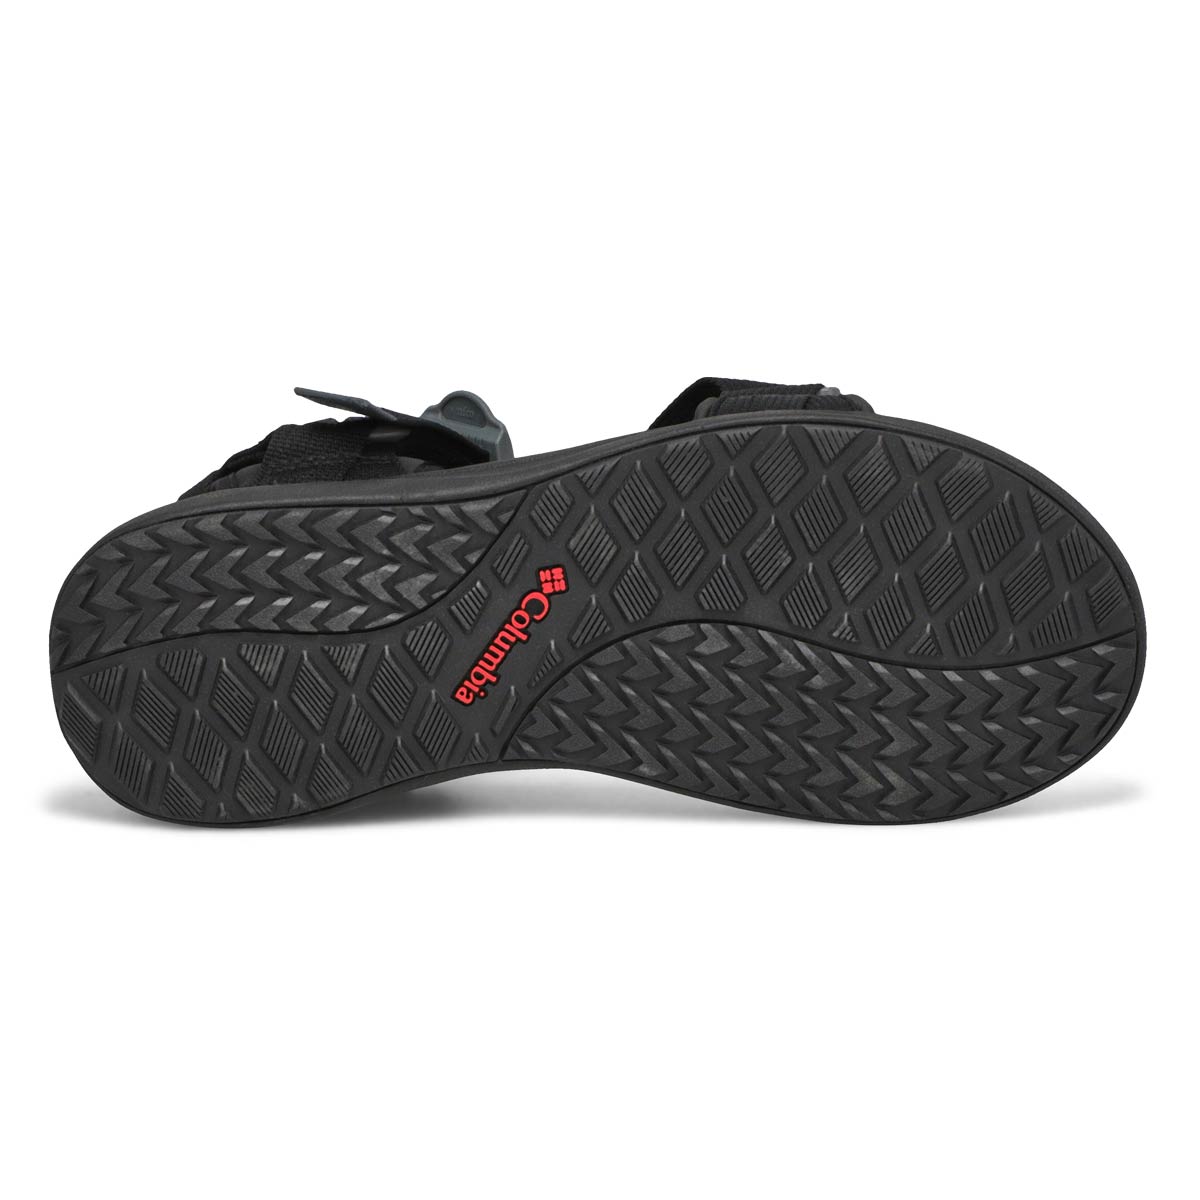 Men's Columbia Sport Sandal - Black/Red